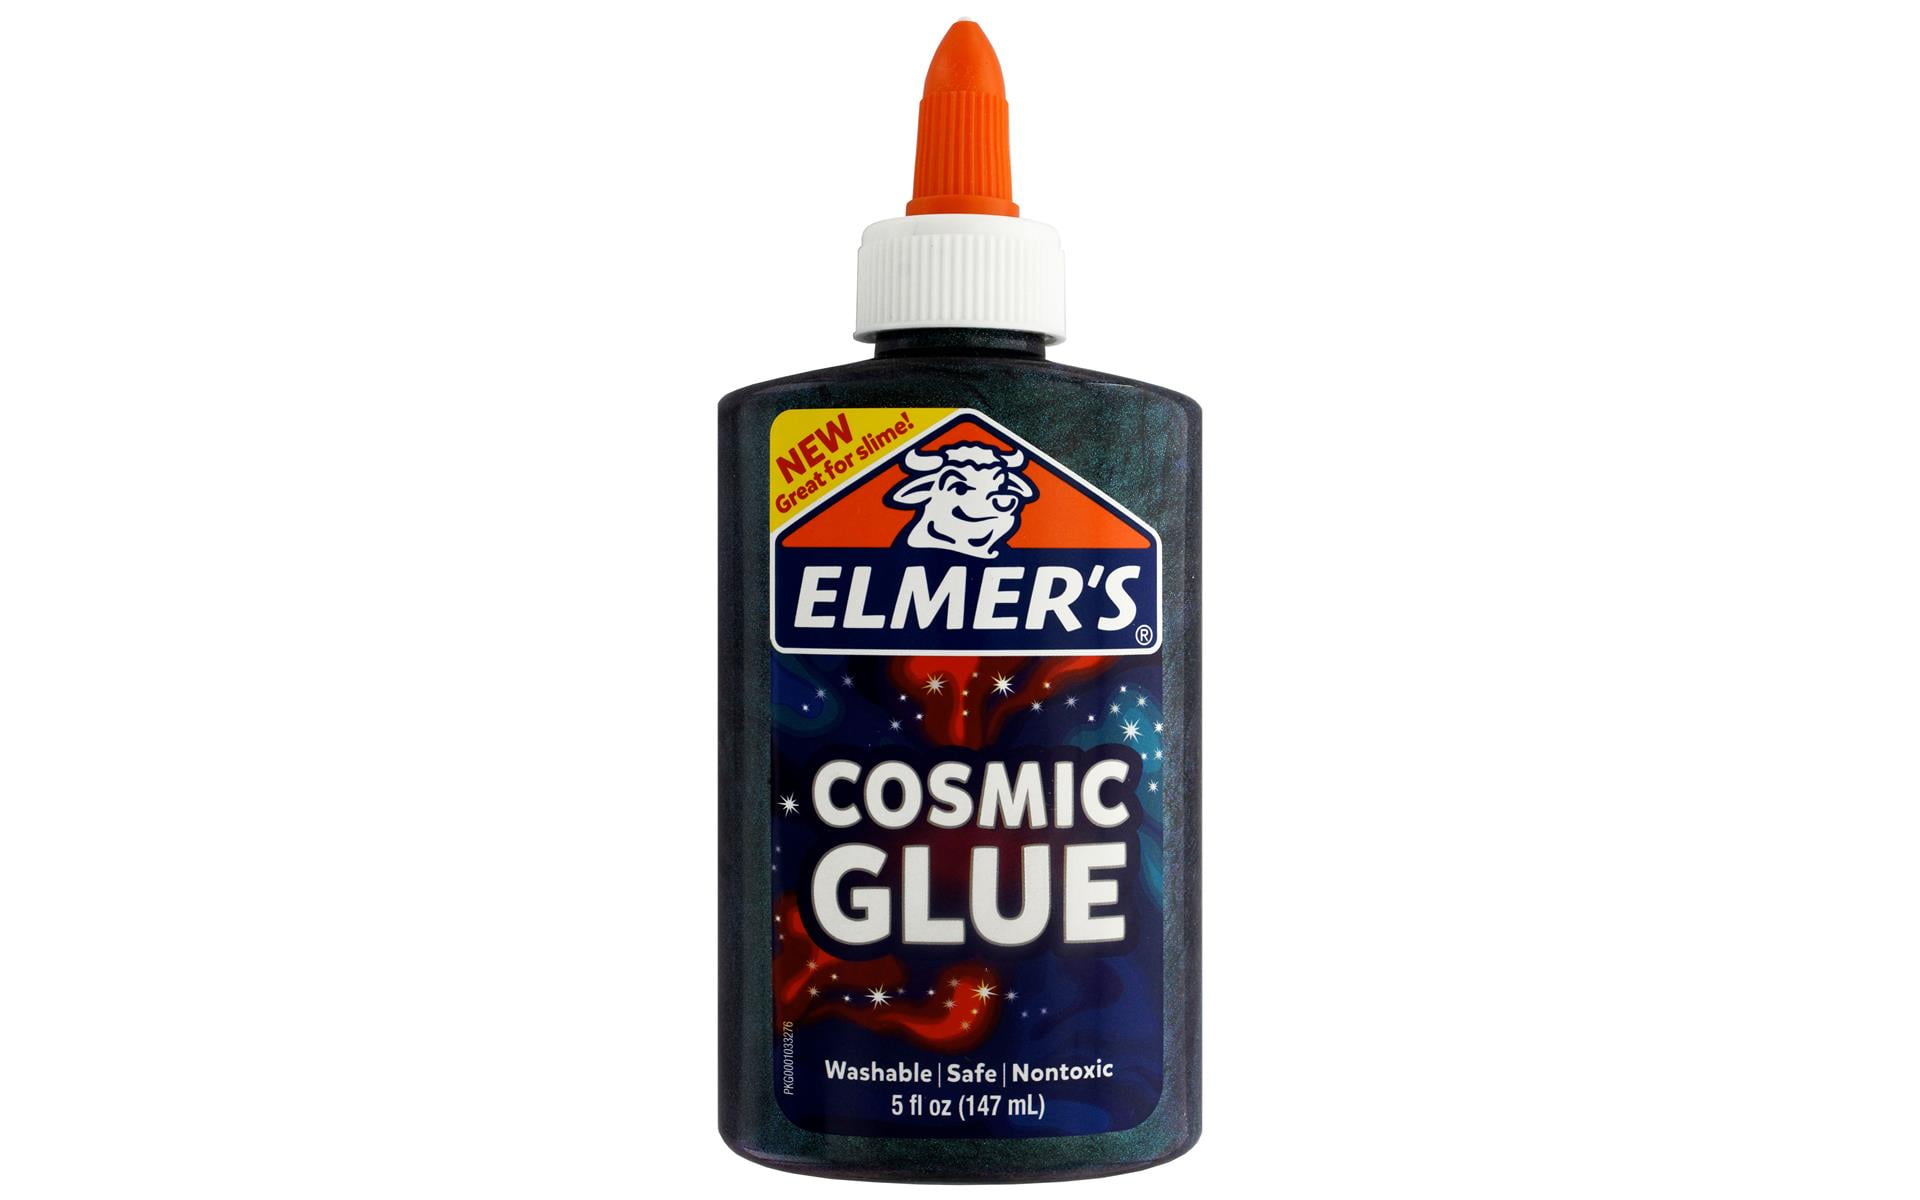 NEW ELMER'S GLUE COSMIC GLUE!! - MIXING ALL OUR ELMER'S GLUE